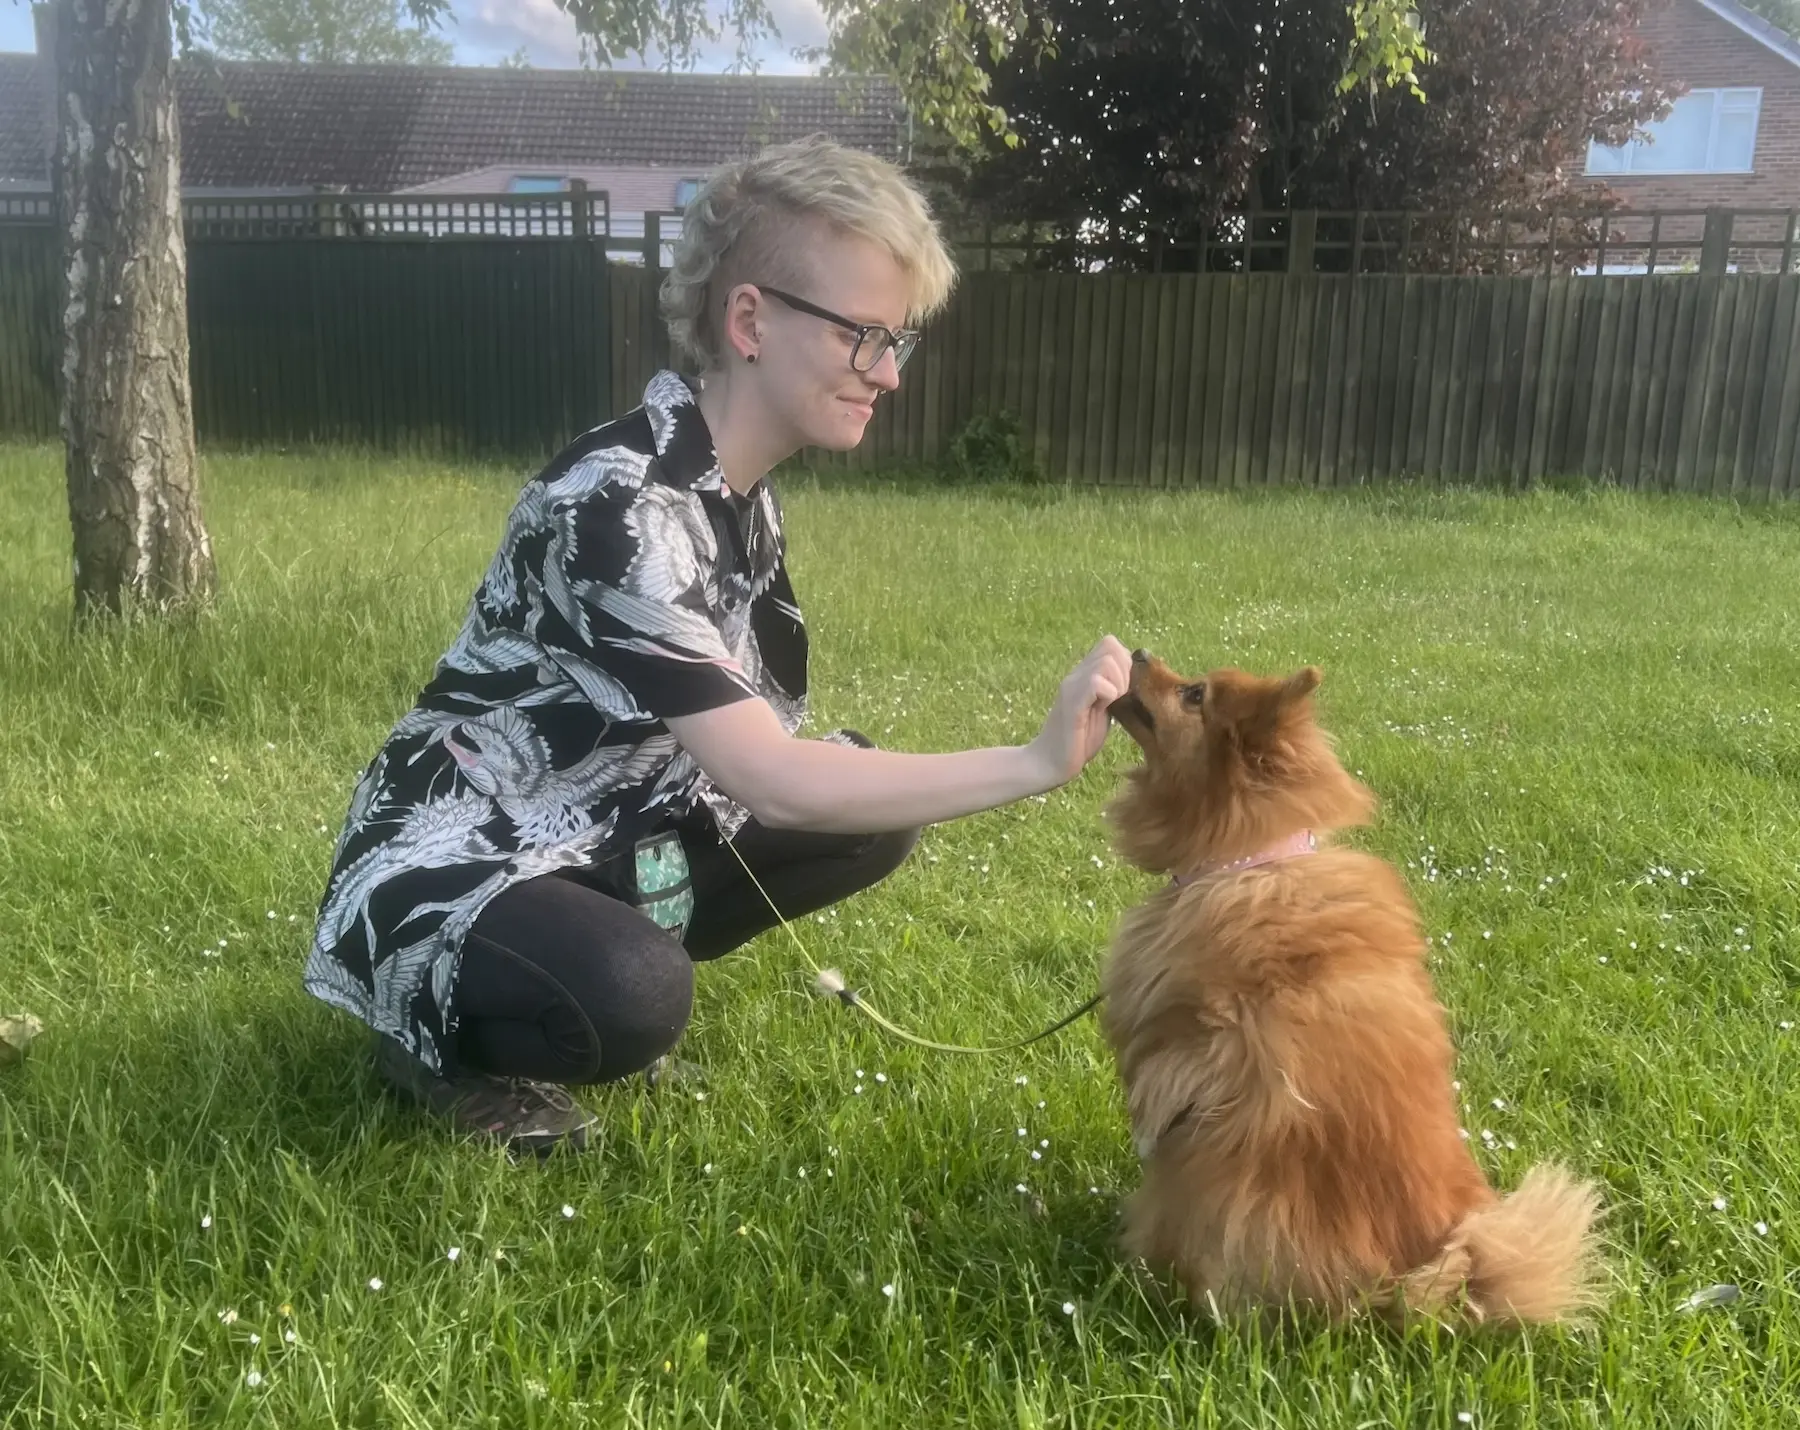 Dog Trainer Giving an Orange Pomeranian a Treat